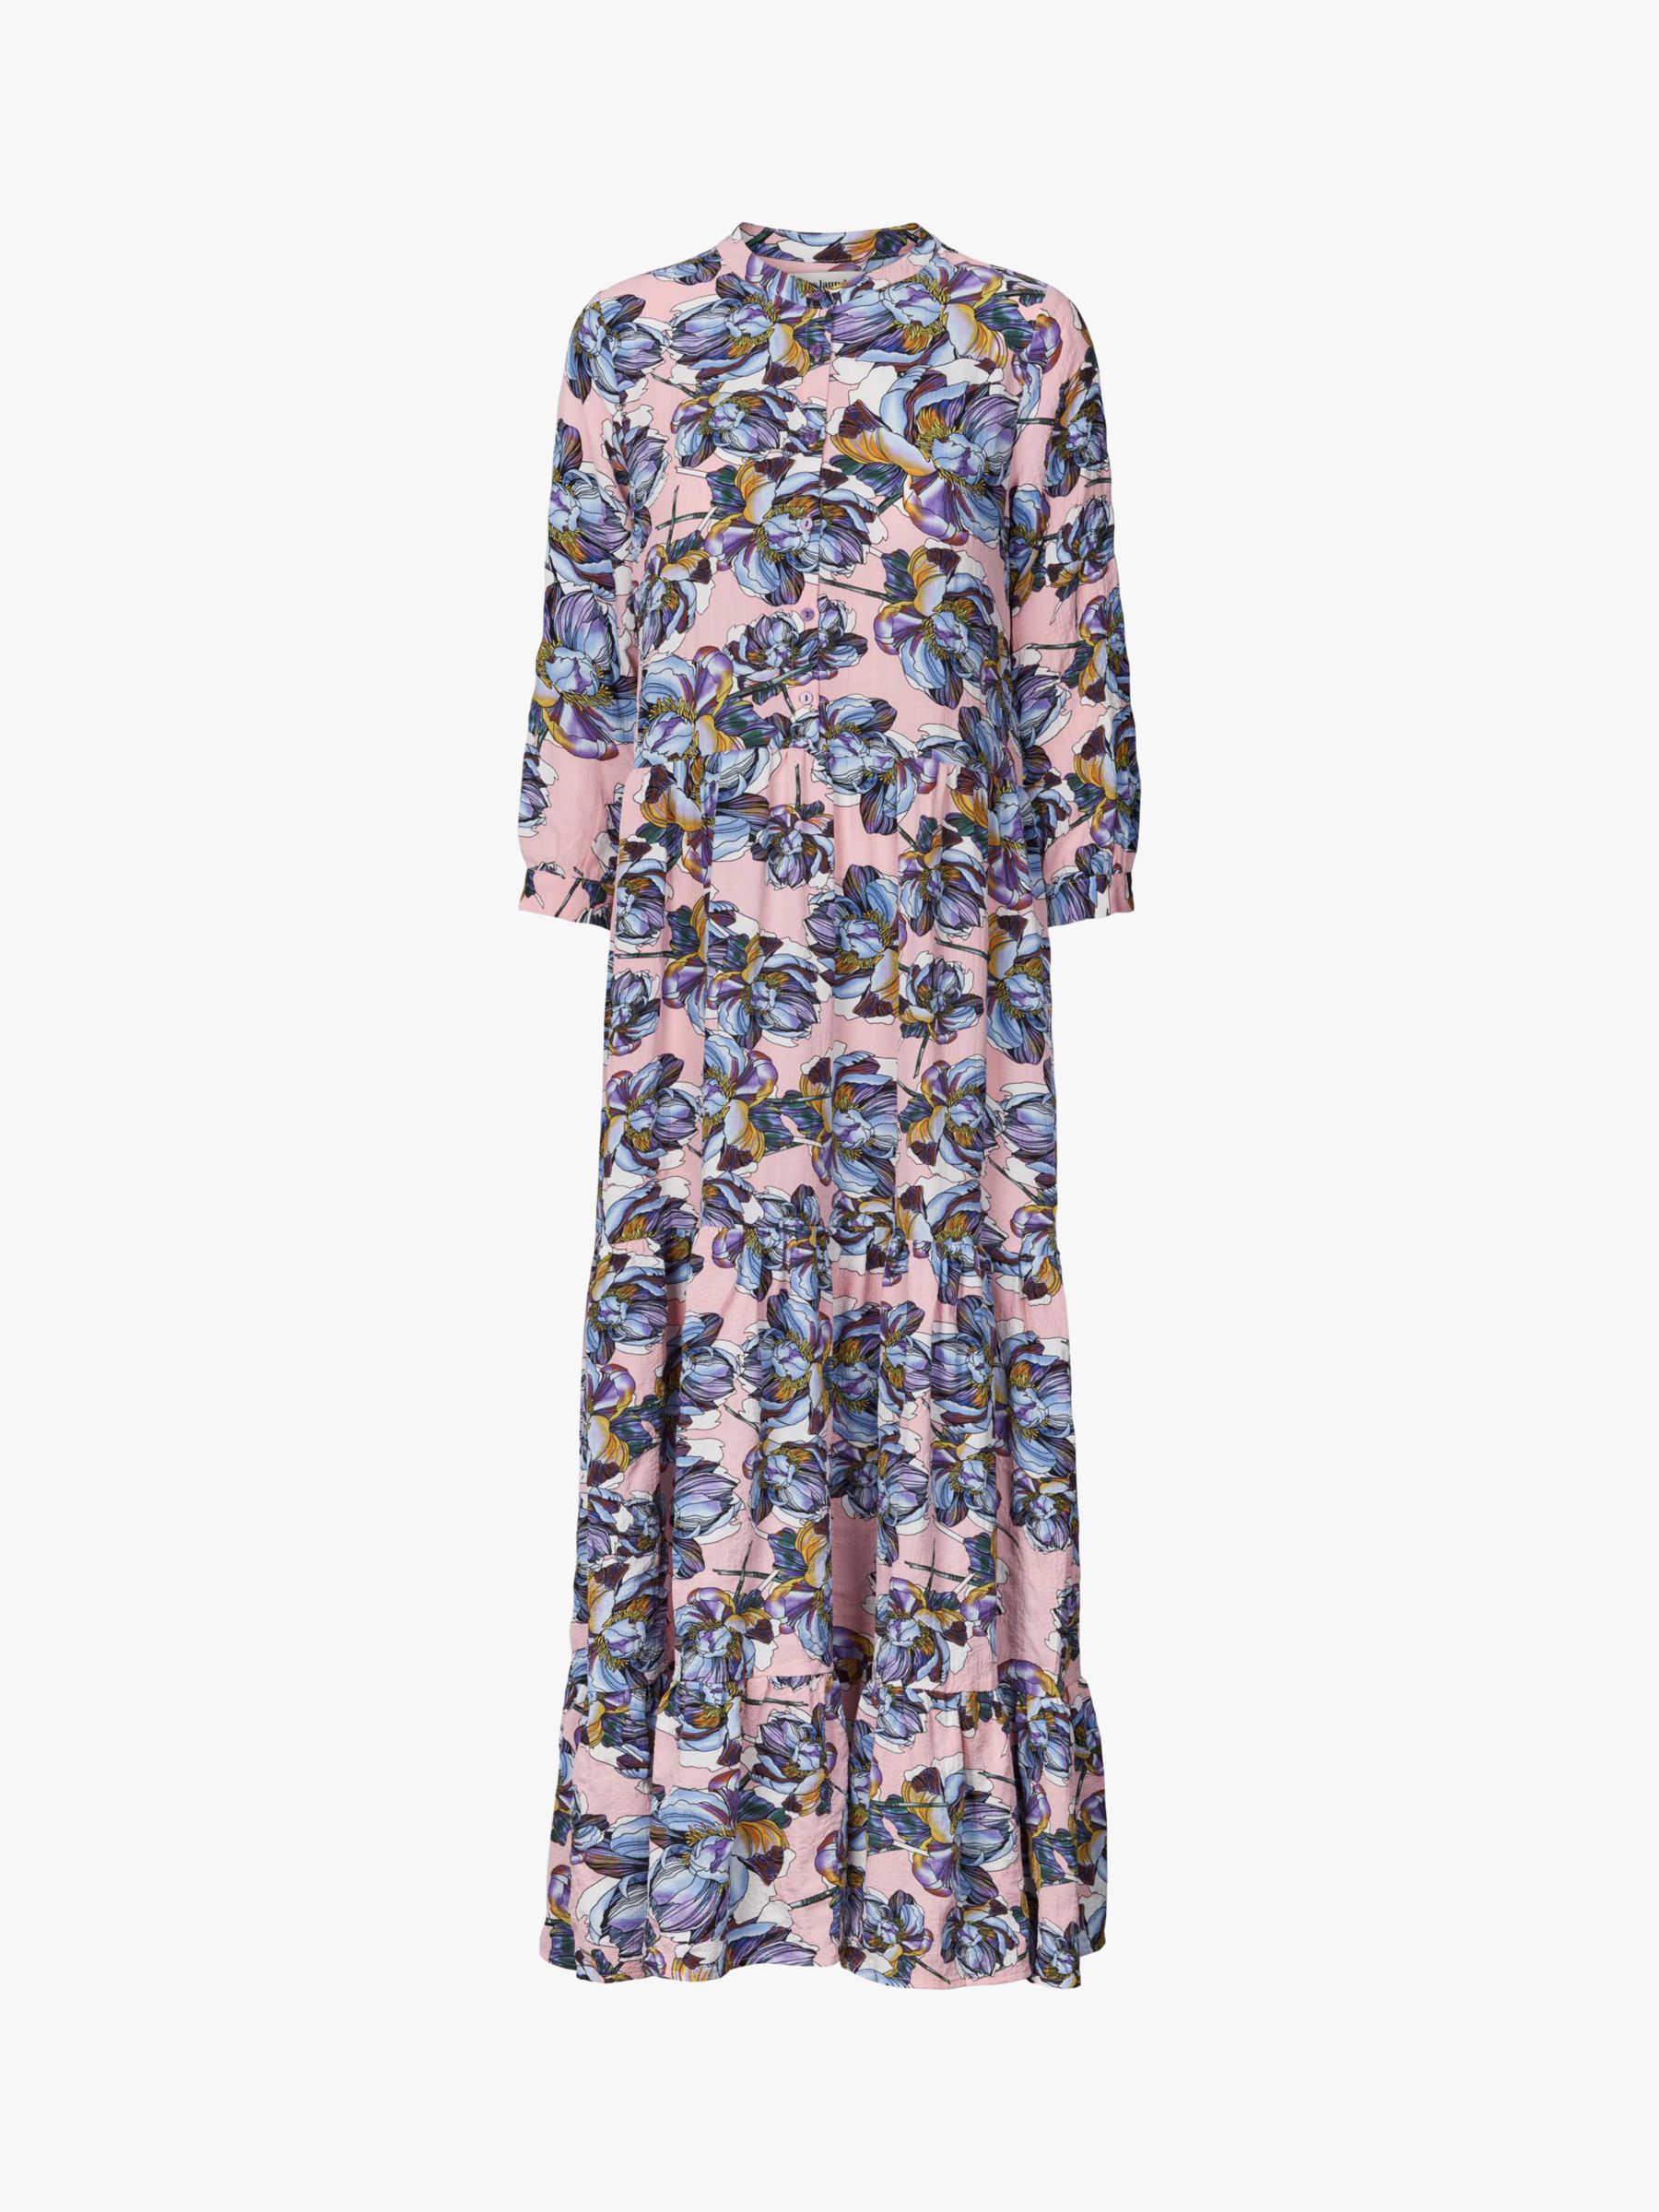 Lollys Laundry Nee Long Sleeve Floral Print Maxi Dress, Multi, XS